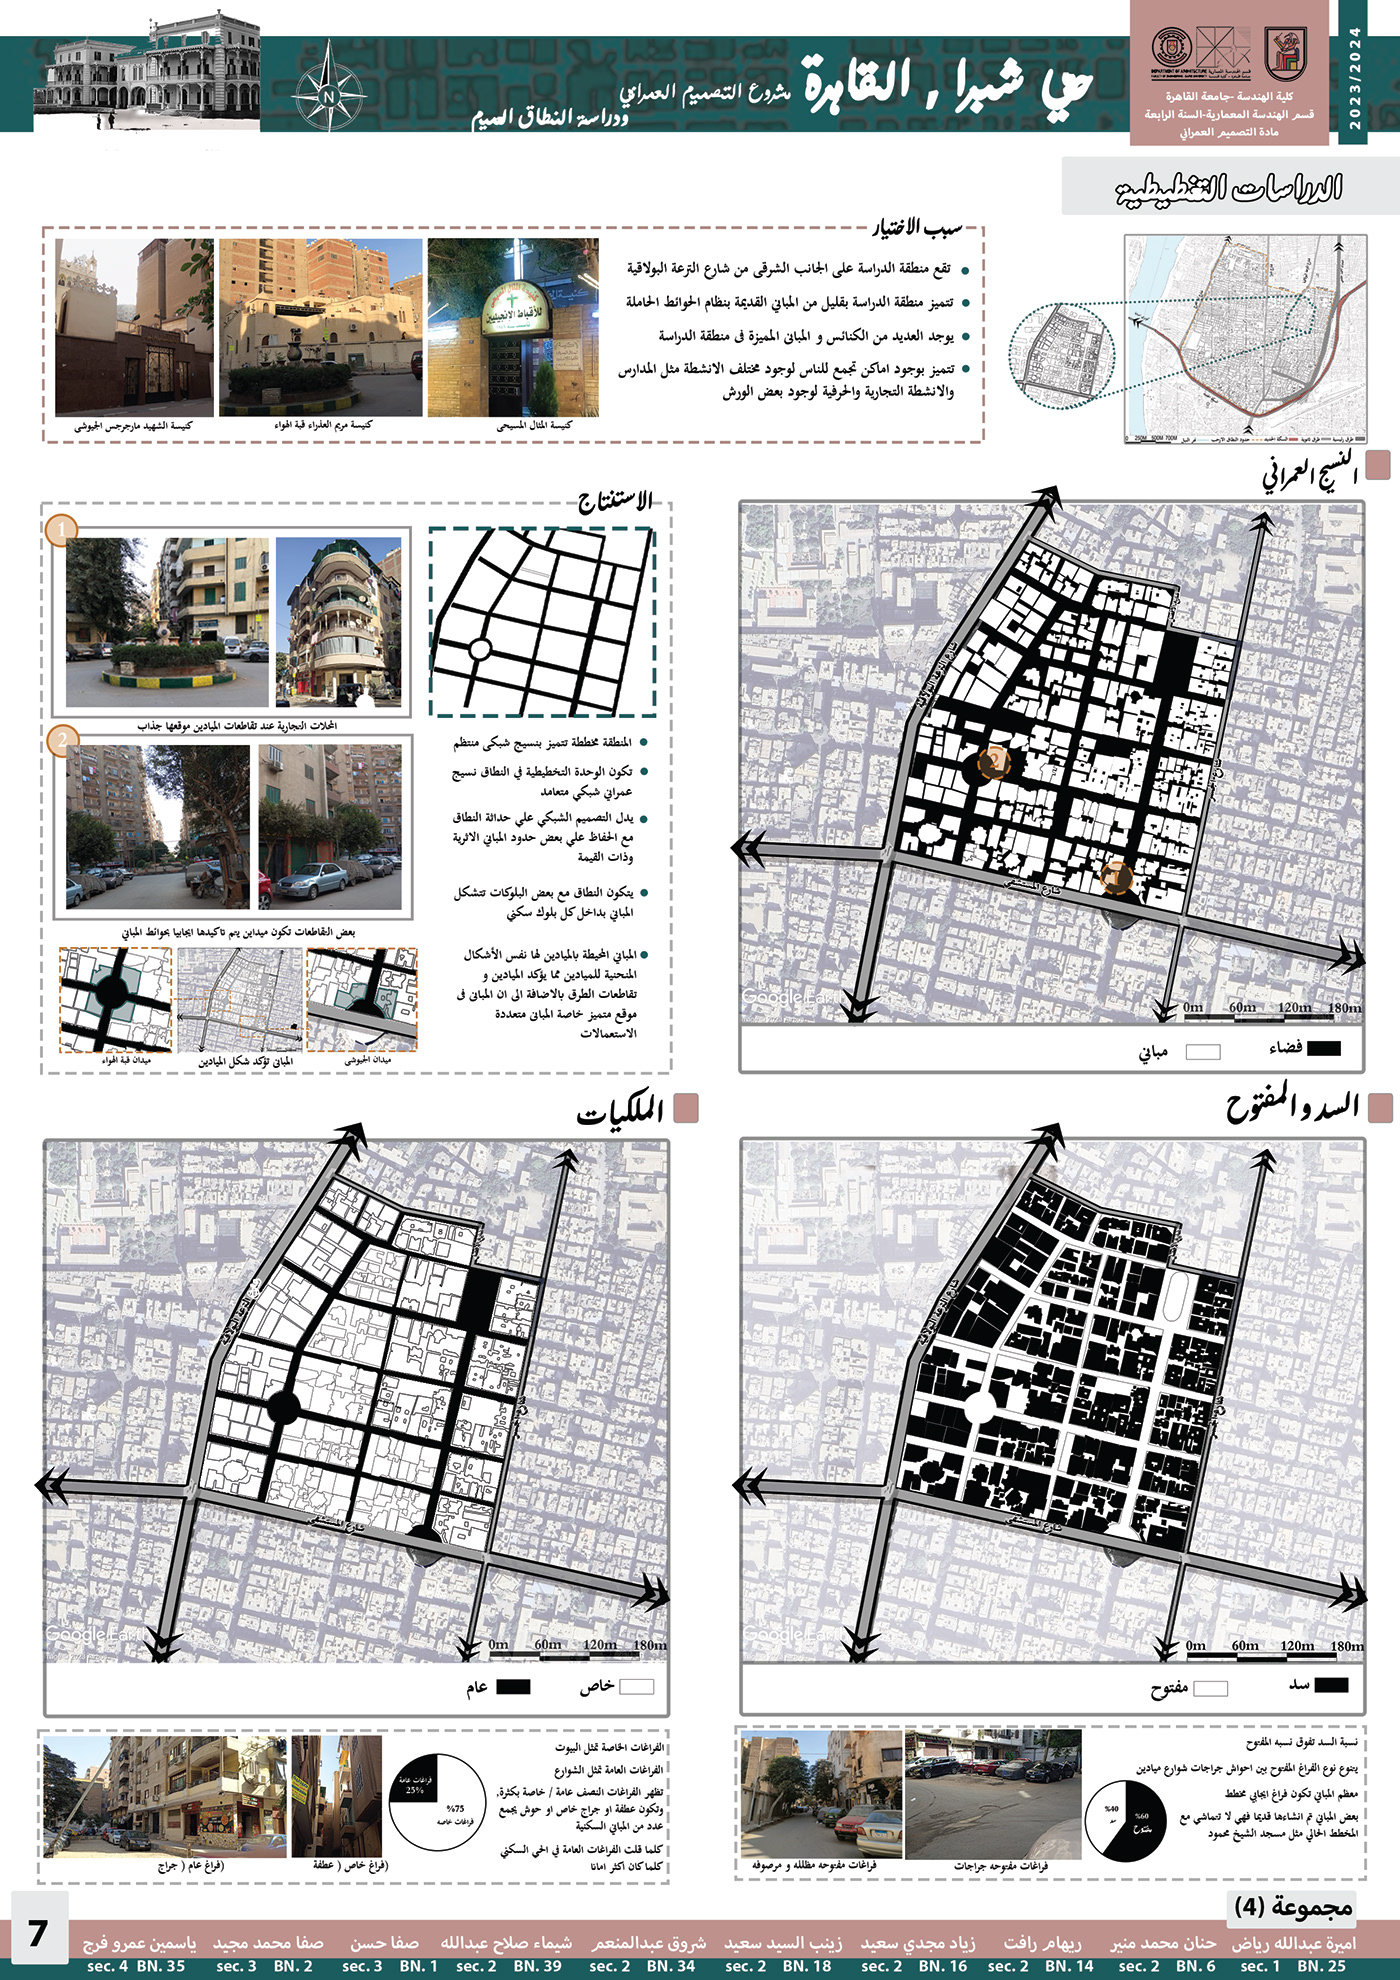 Urban Design Landscape Design architecture Urban development architectural design visualization 3d modeling lumion district design